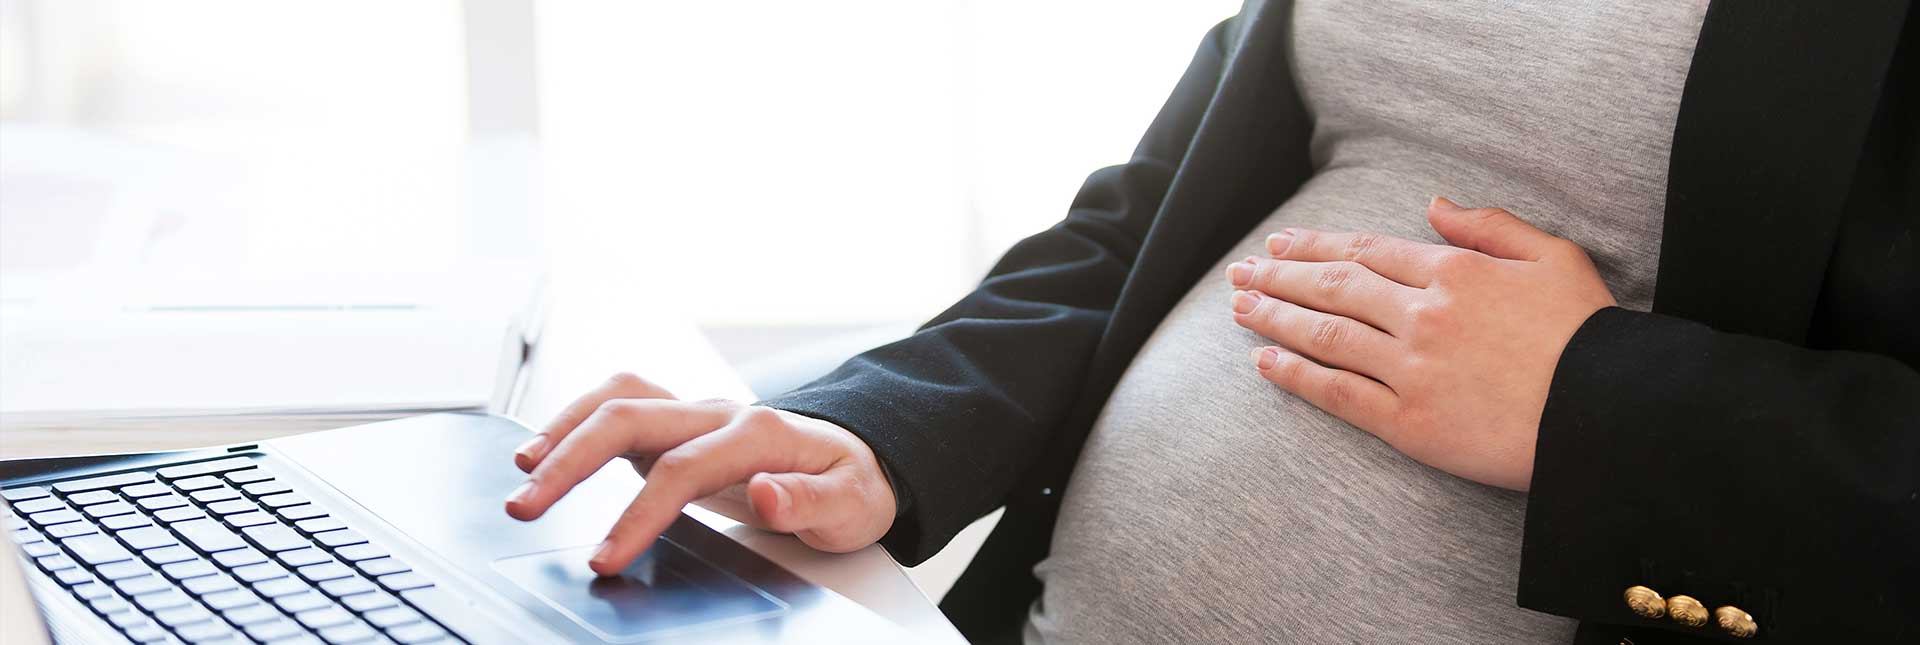 pregnancy discrimination in workplace